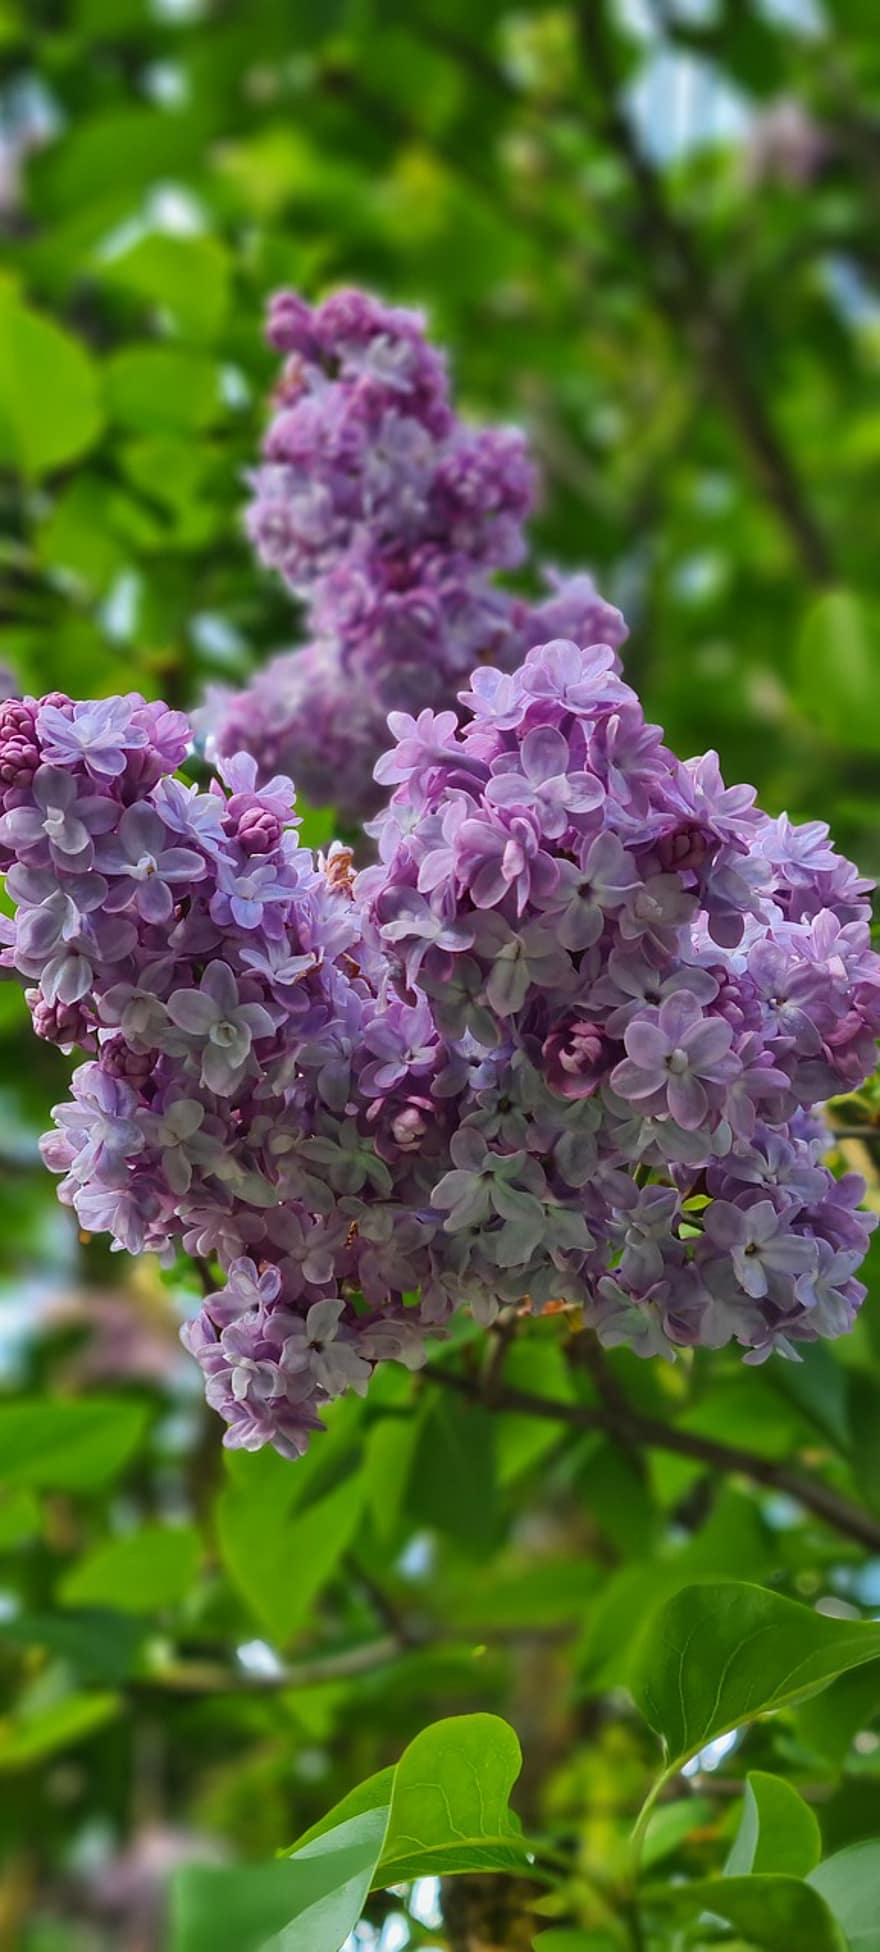 Lilac, Flowers, Plants, Purple Flowers, Petals, Buds, Bloom, Leaves, Garden, Nature